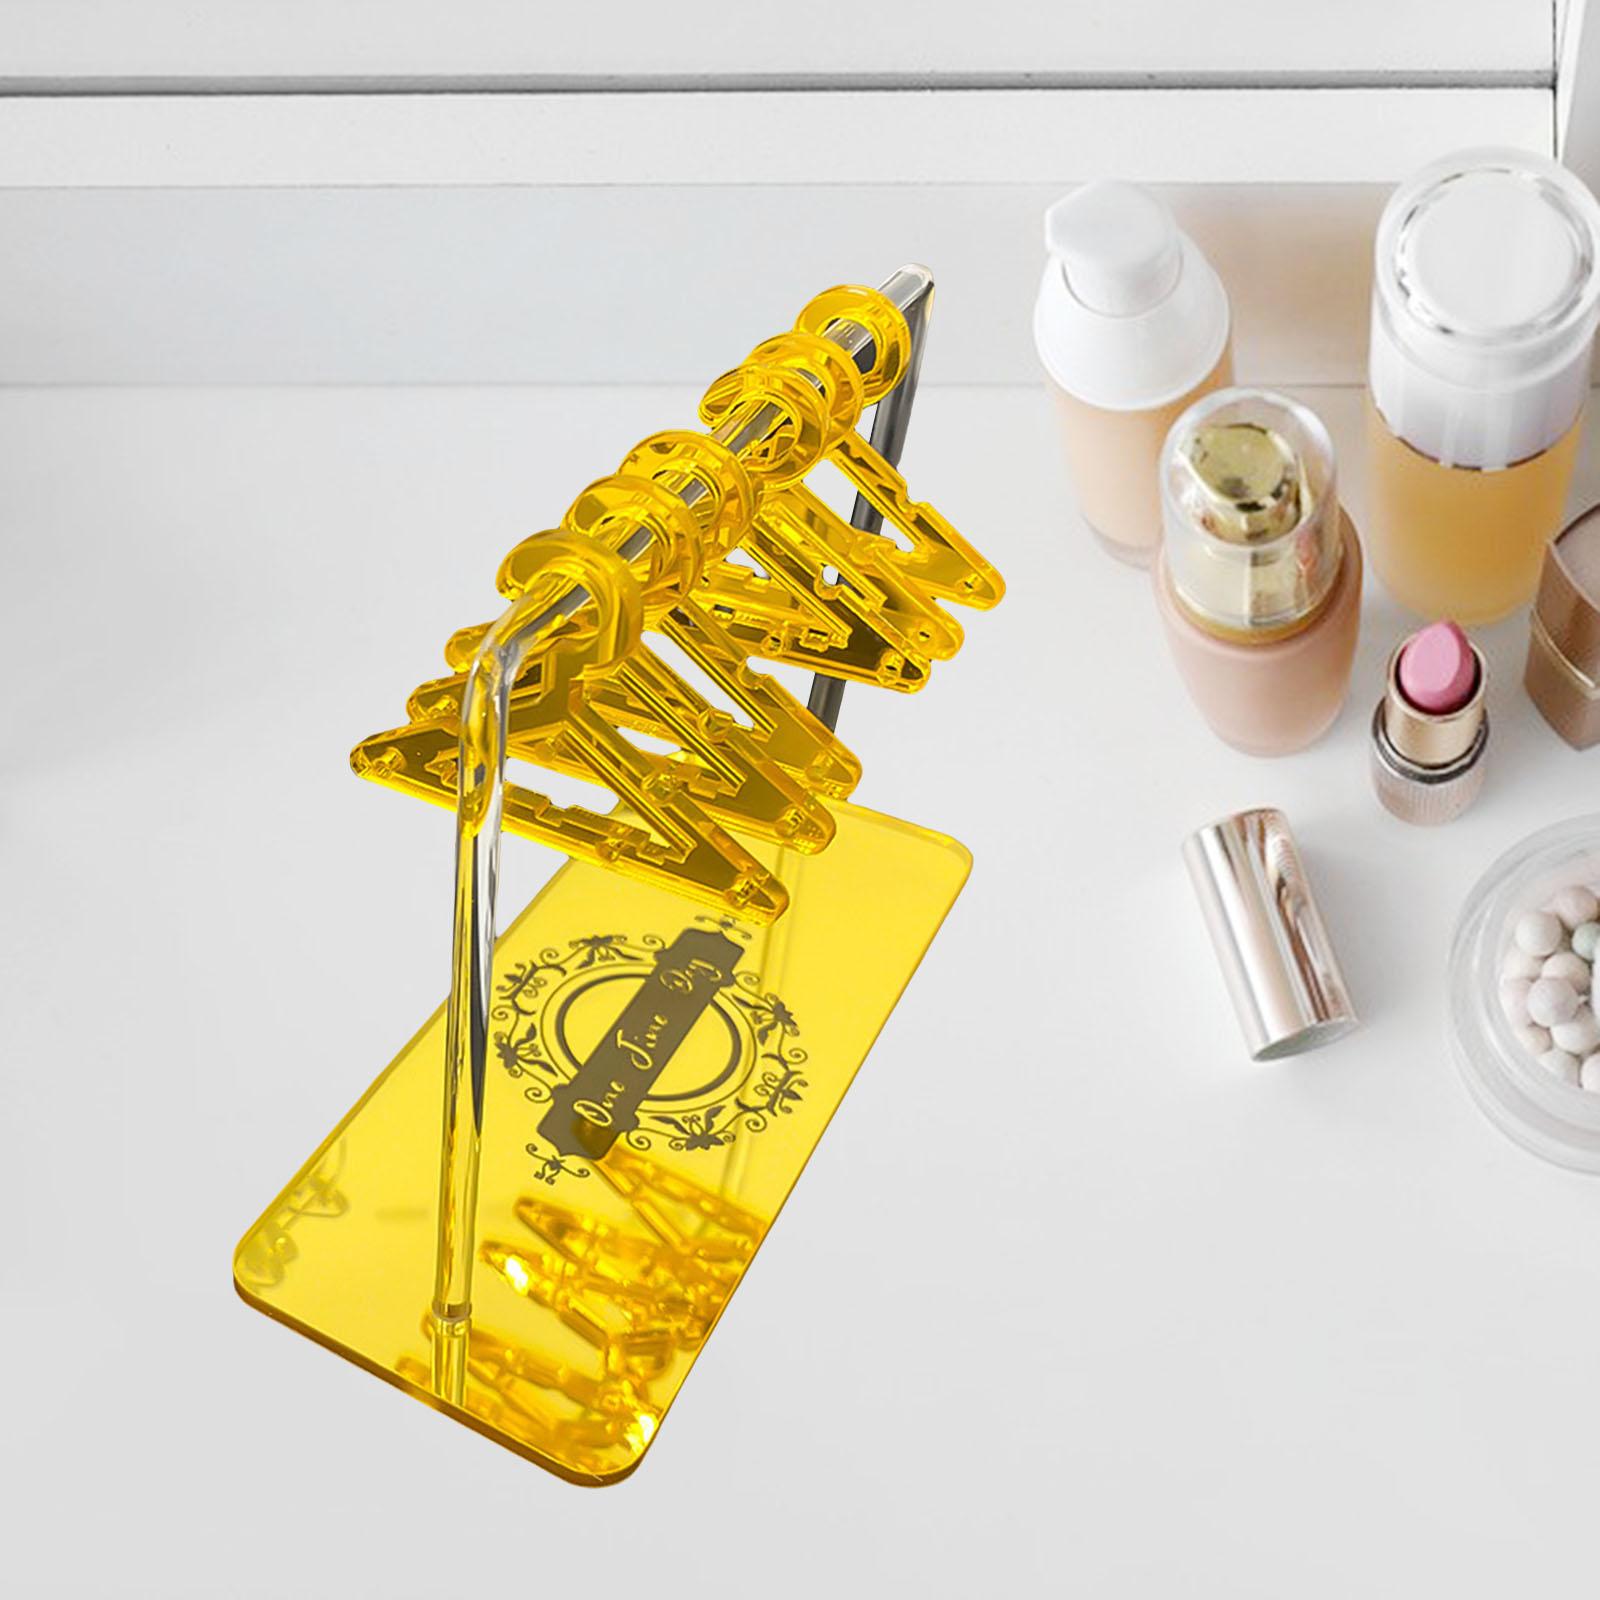 Detachable Acrylic Earring Hanger Rack Storage Display Stand for Women Girls Yellow